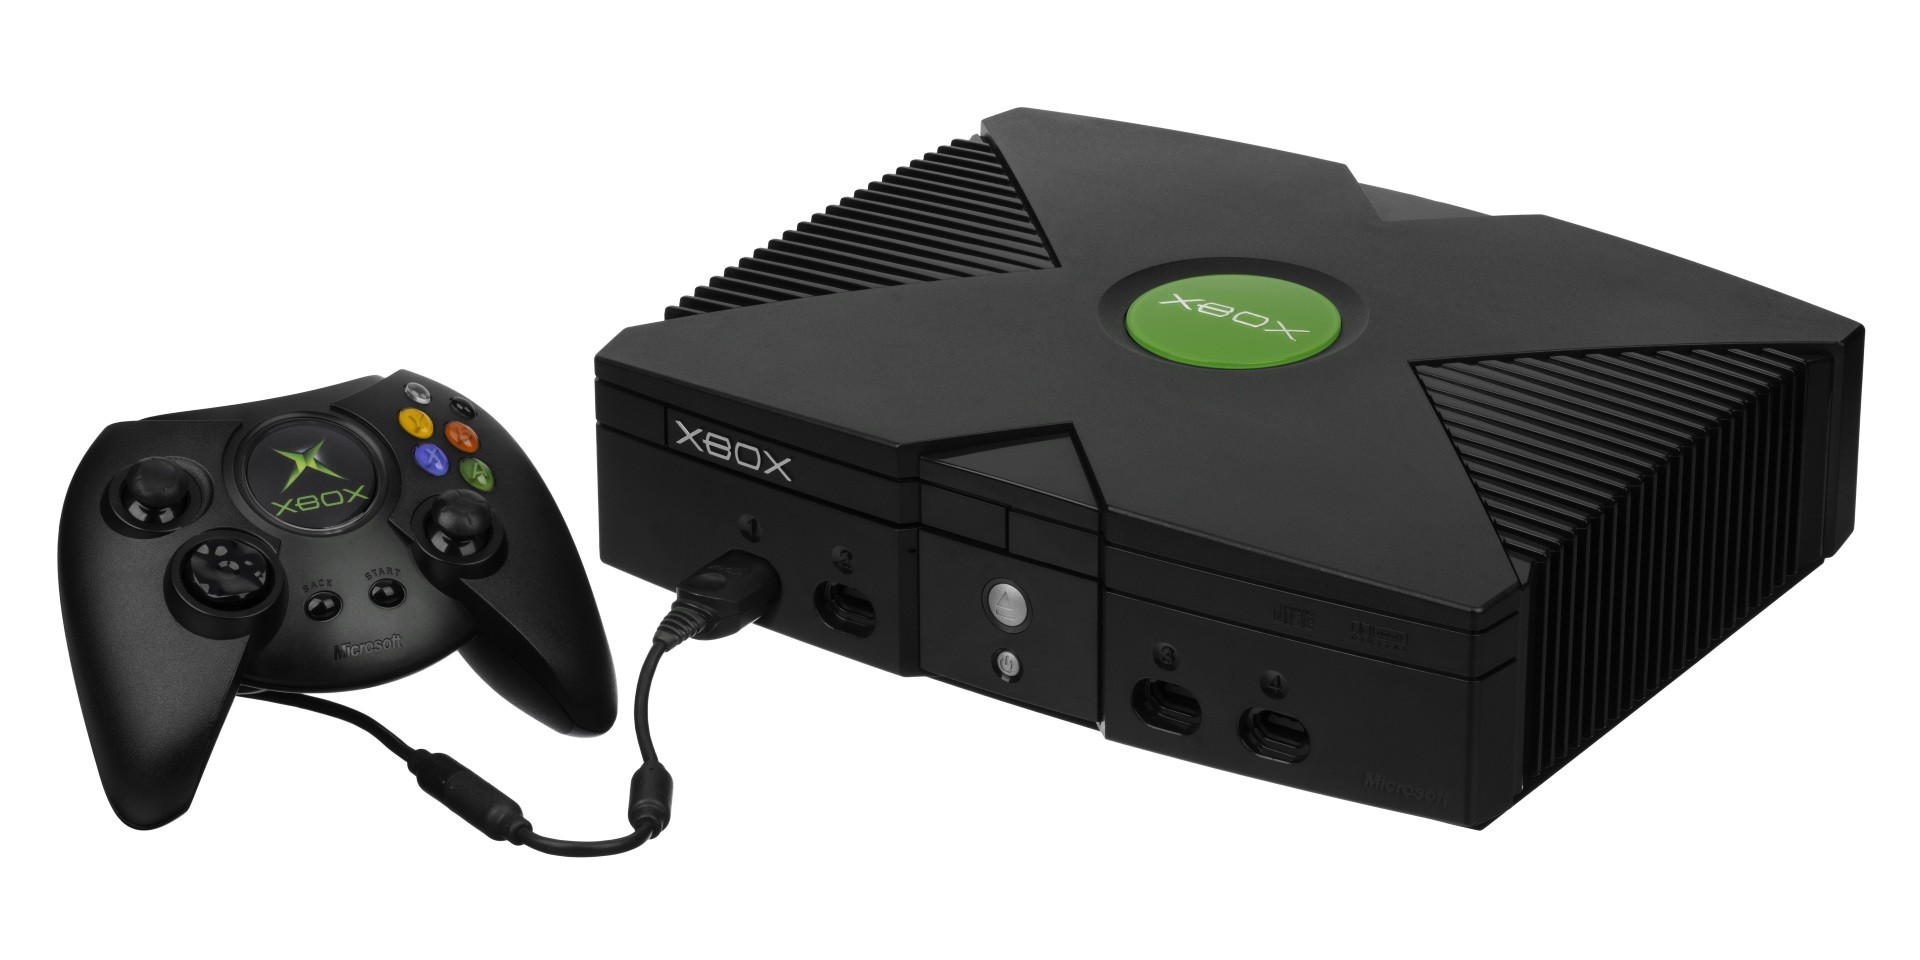 Xbox 歡慶 20 周年紀念特別直播節目 16 日凌晨登場 回顧精彩歷程曝光最新資訊